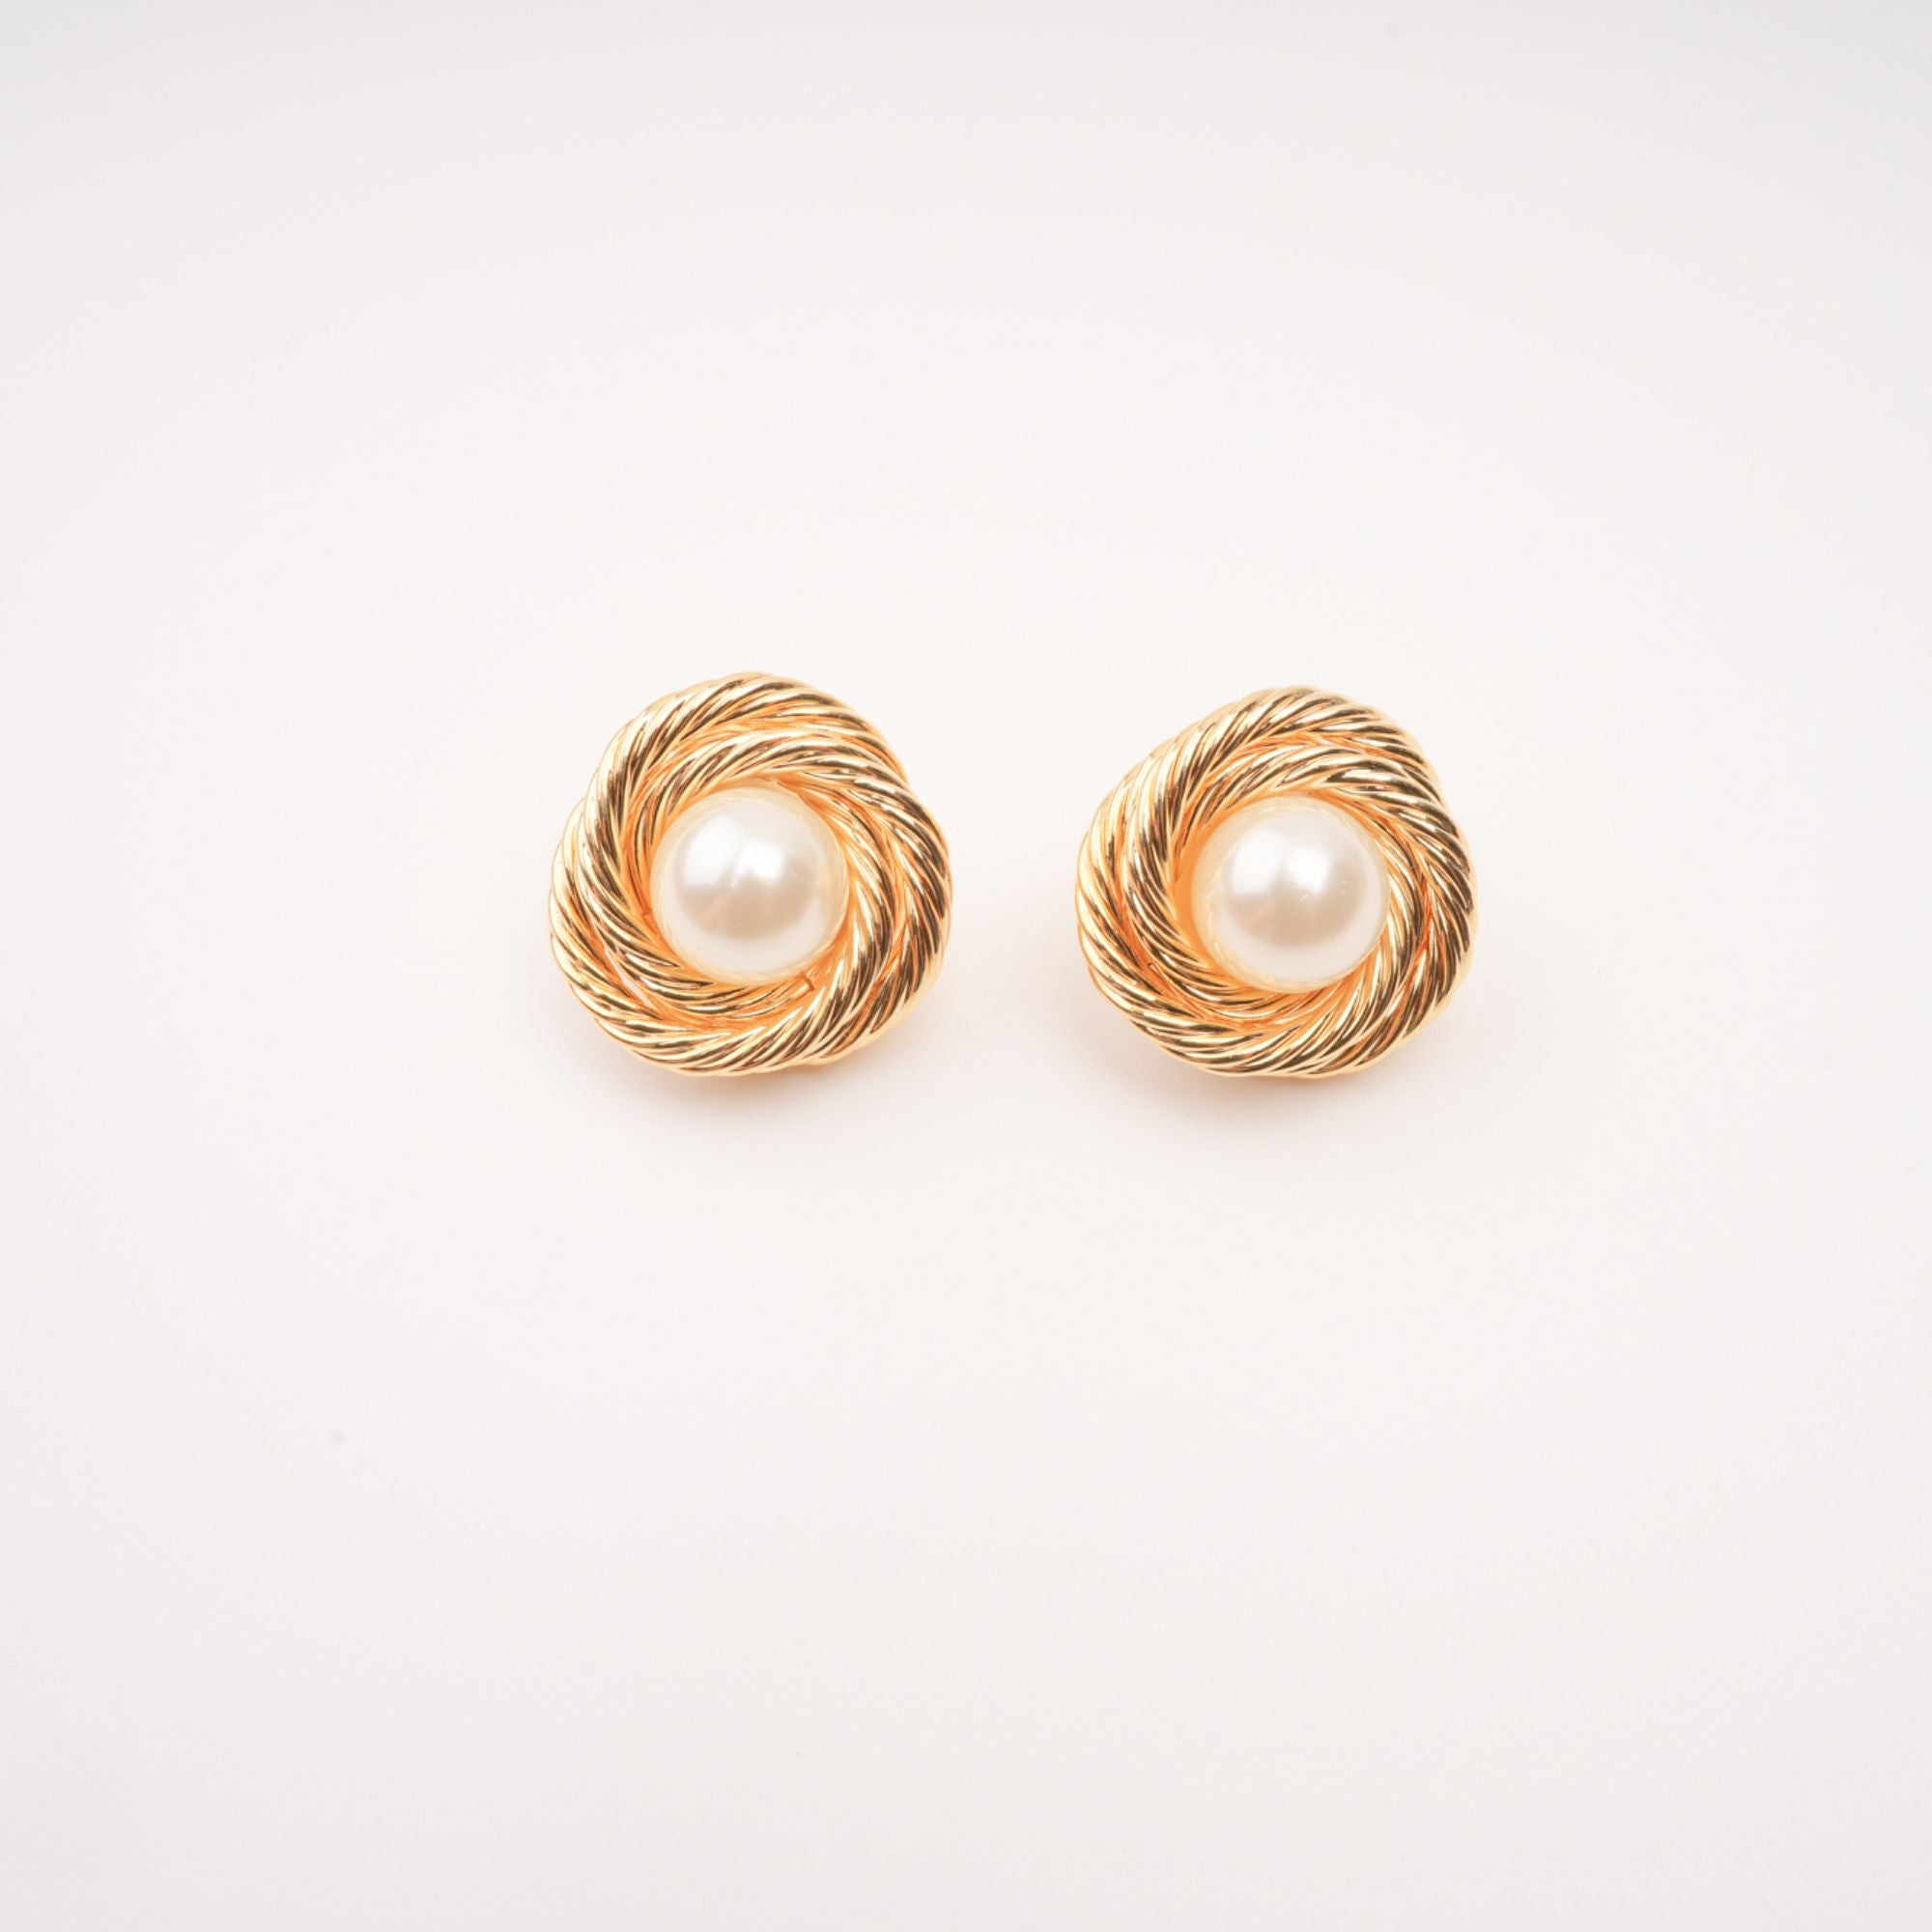 Chloe faux-pearl gold-plated earrings